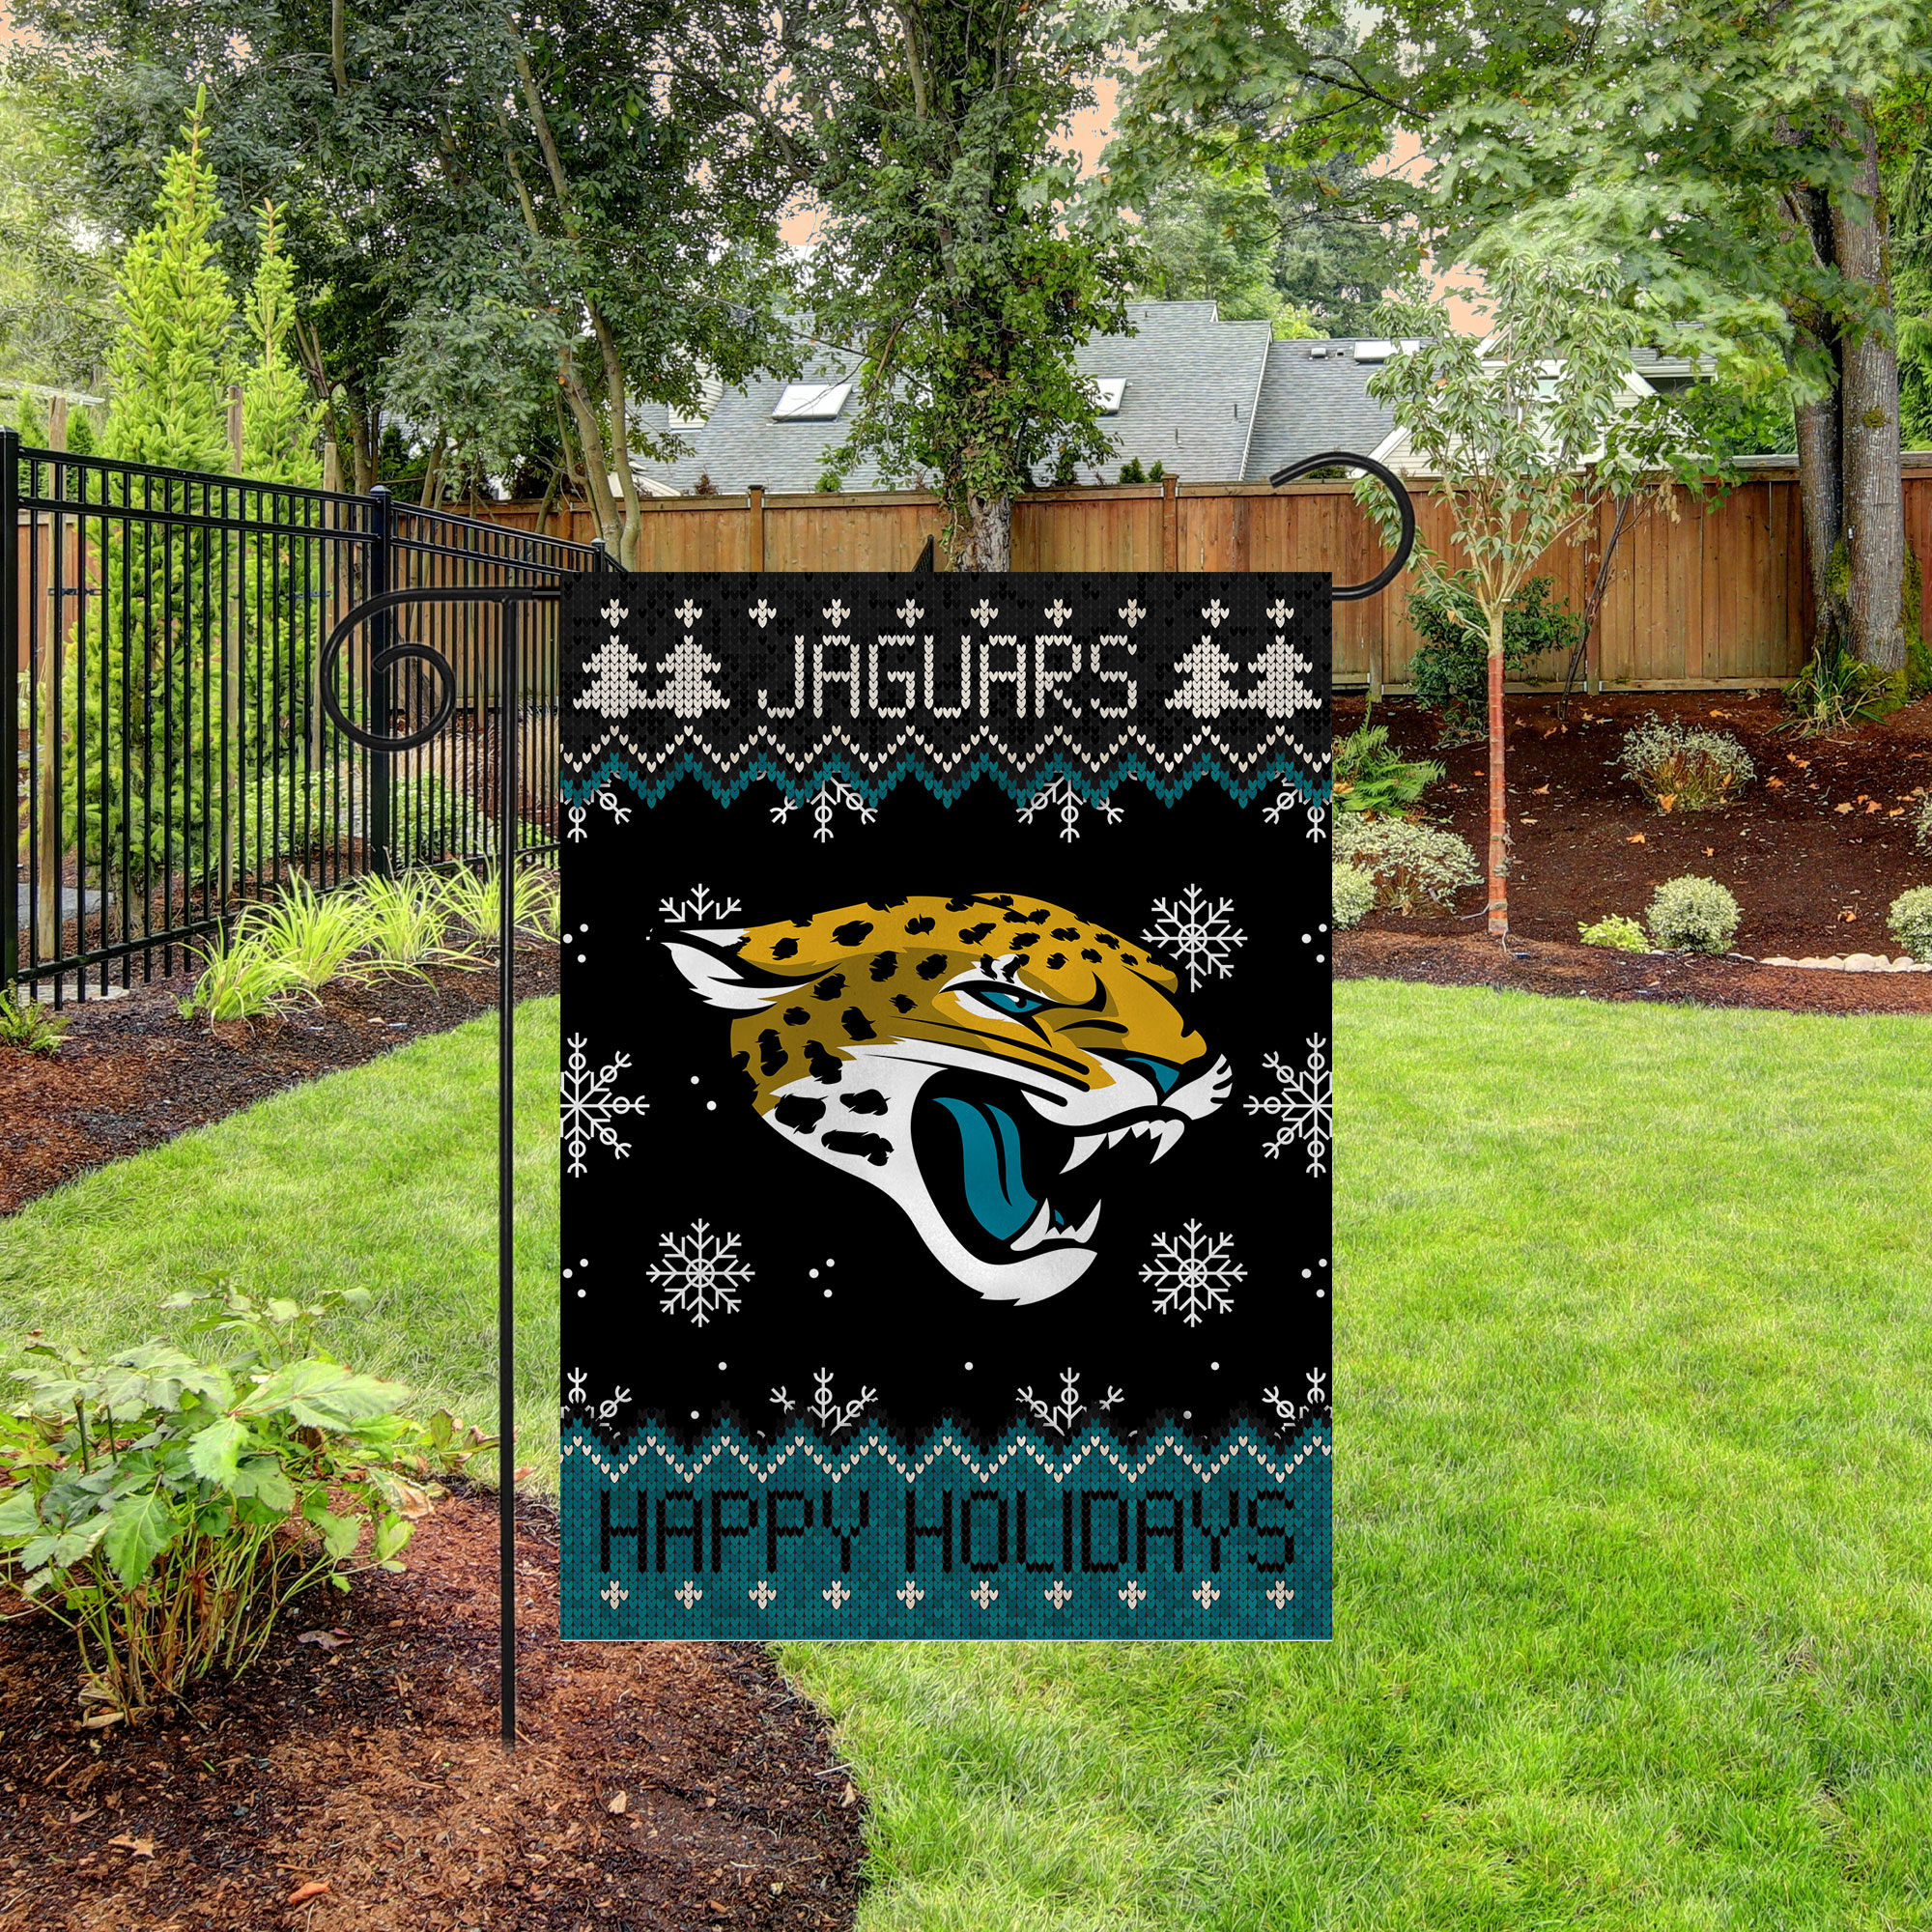 Rico Industries NFL Football Jacksonville Jaguars Winter/Snowflake Double Sided Garden Flag